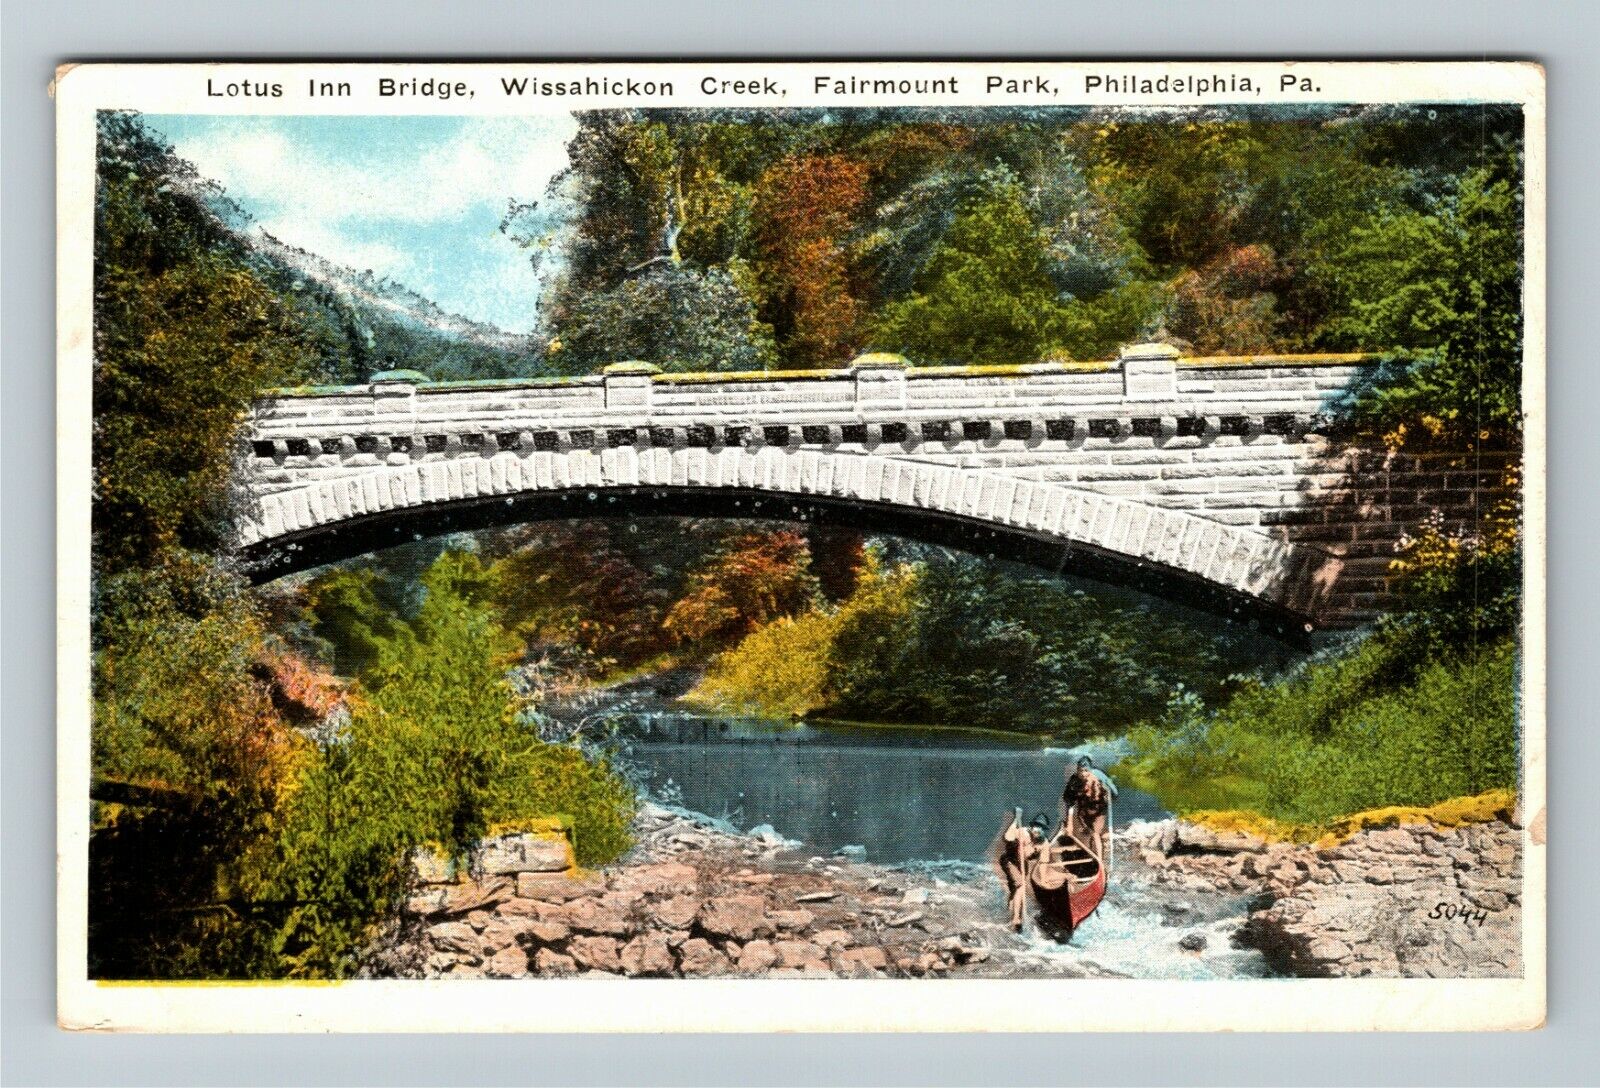 Philadelphia Pennsylvania, LOTUS INN BRIDGE, FAIRMOUNT PARK Vintage Postcard